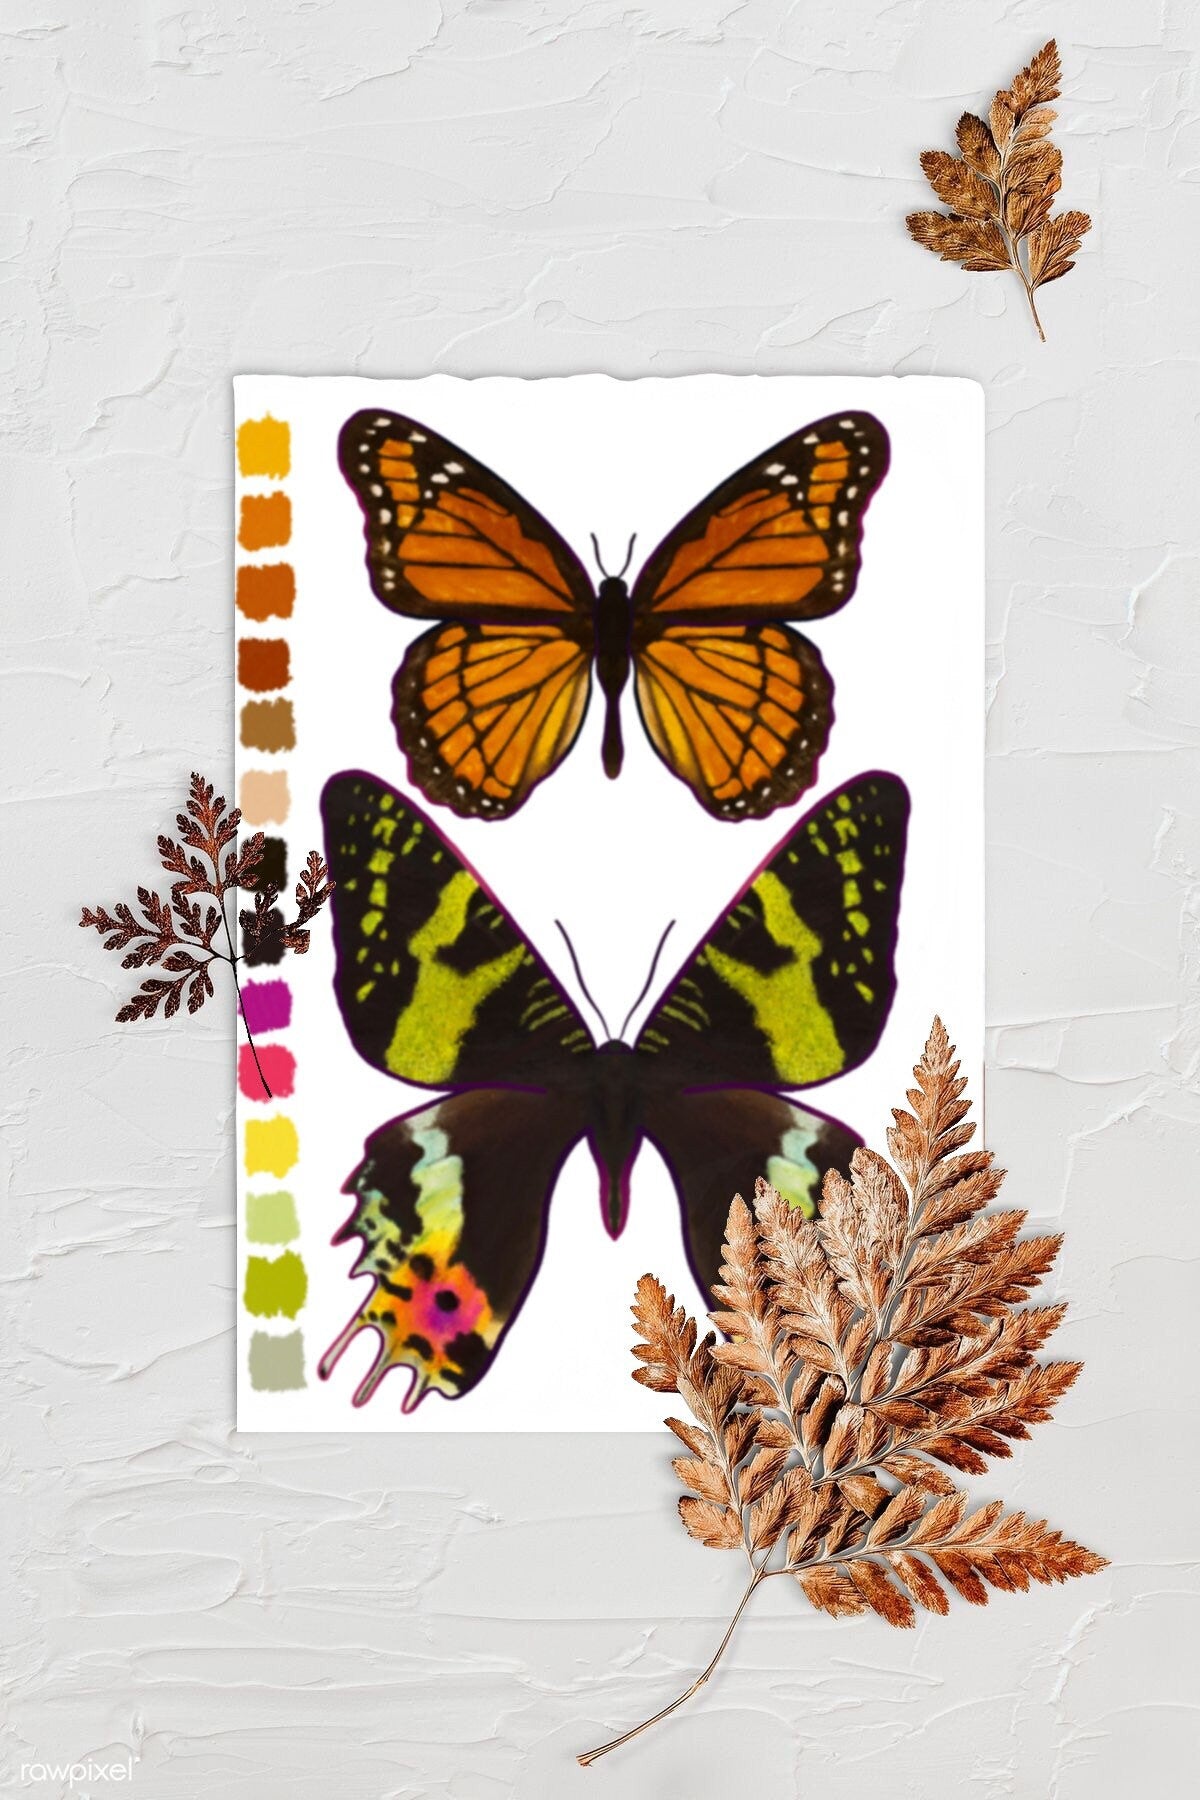 Digital Sketchbook 5x7 Print Butterfly + Moth Illustration.